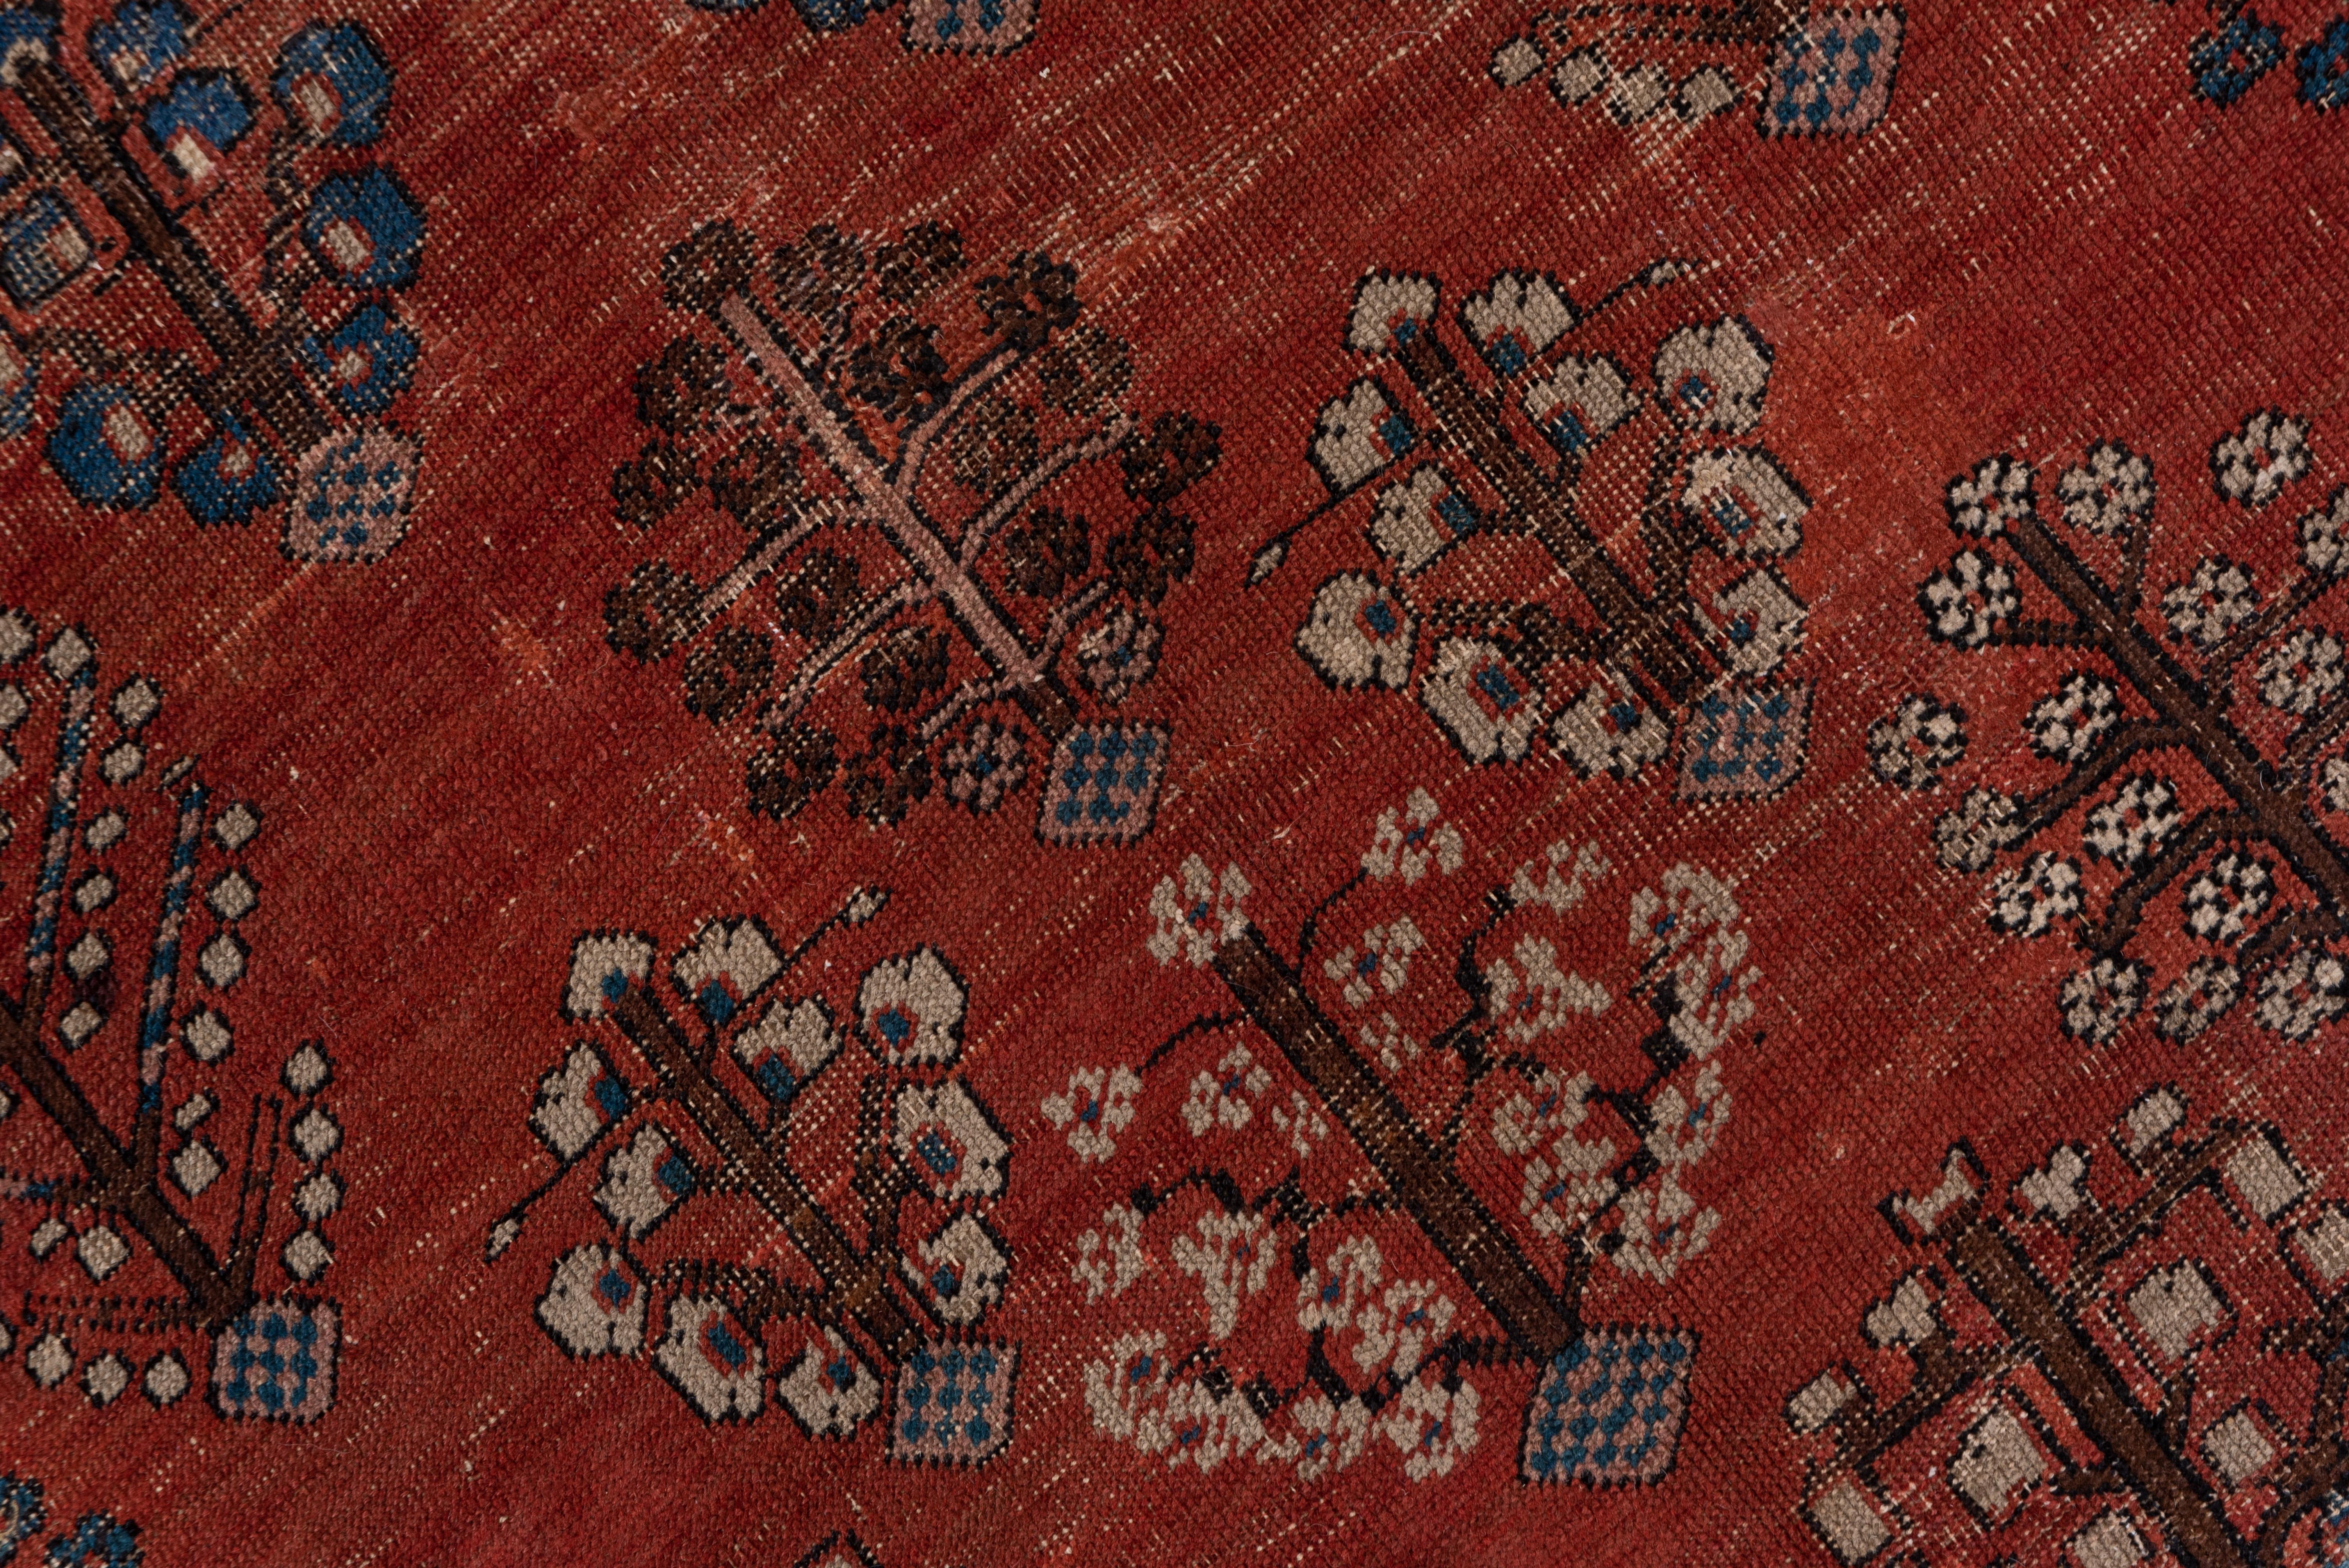 Late 19th Century Authentic Persian Bakhshayesh Carpet, Amazing Colors, Zanabaki Border